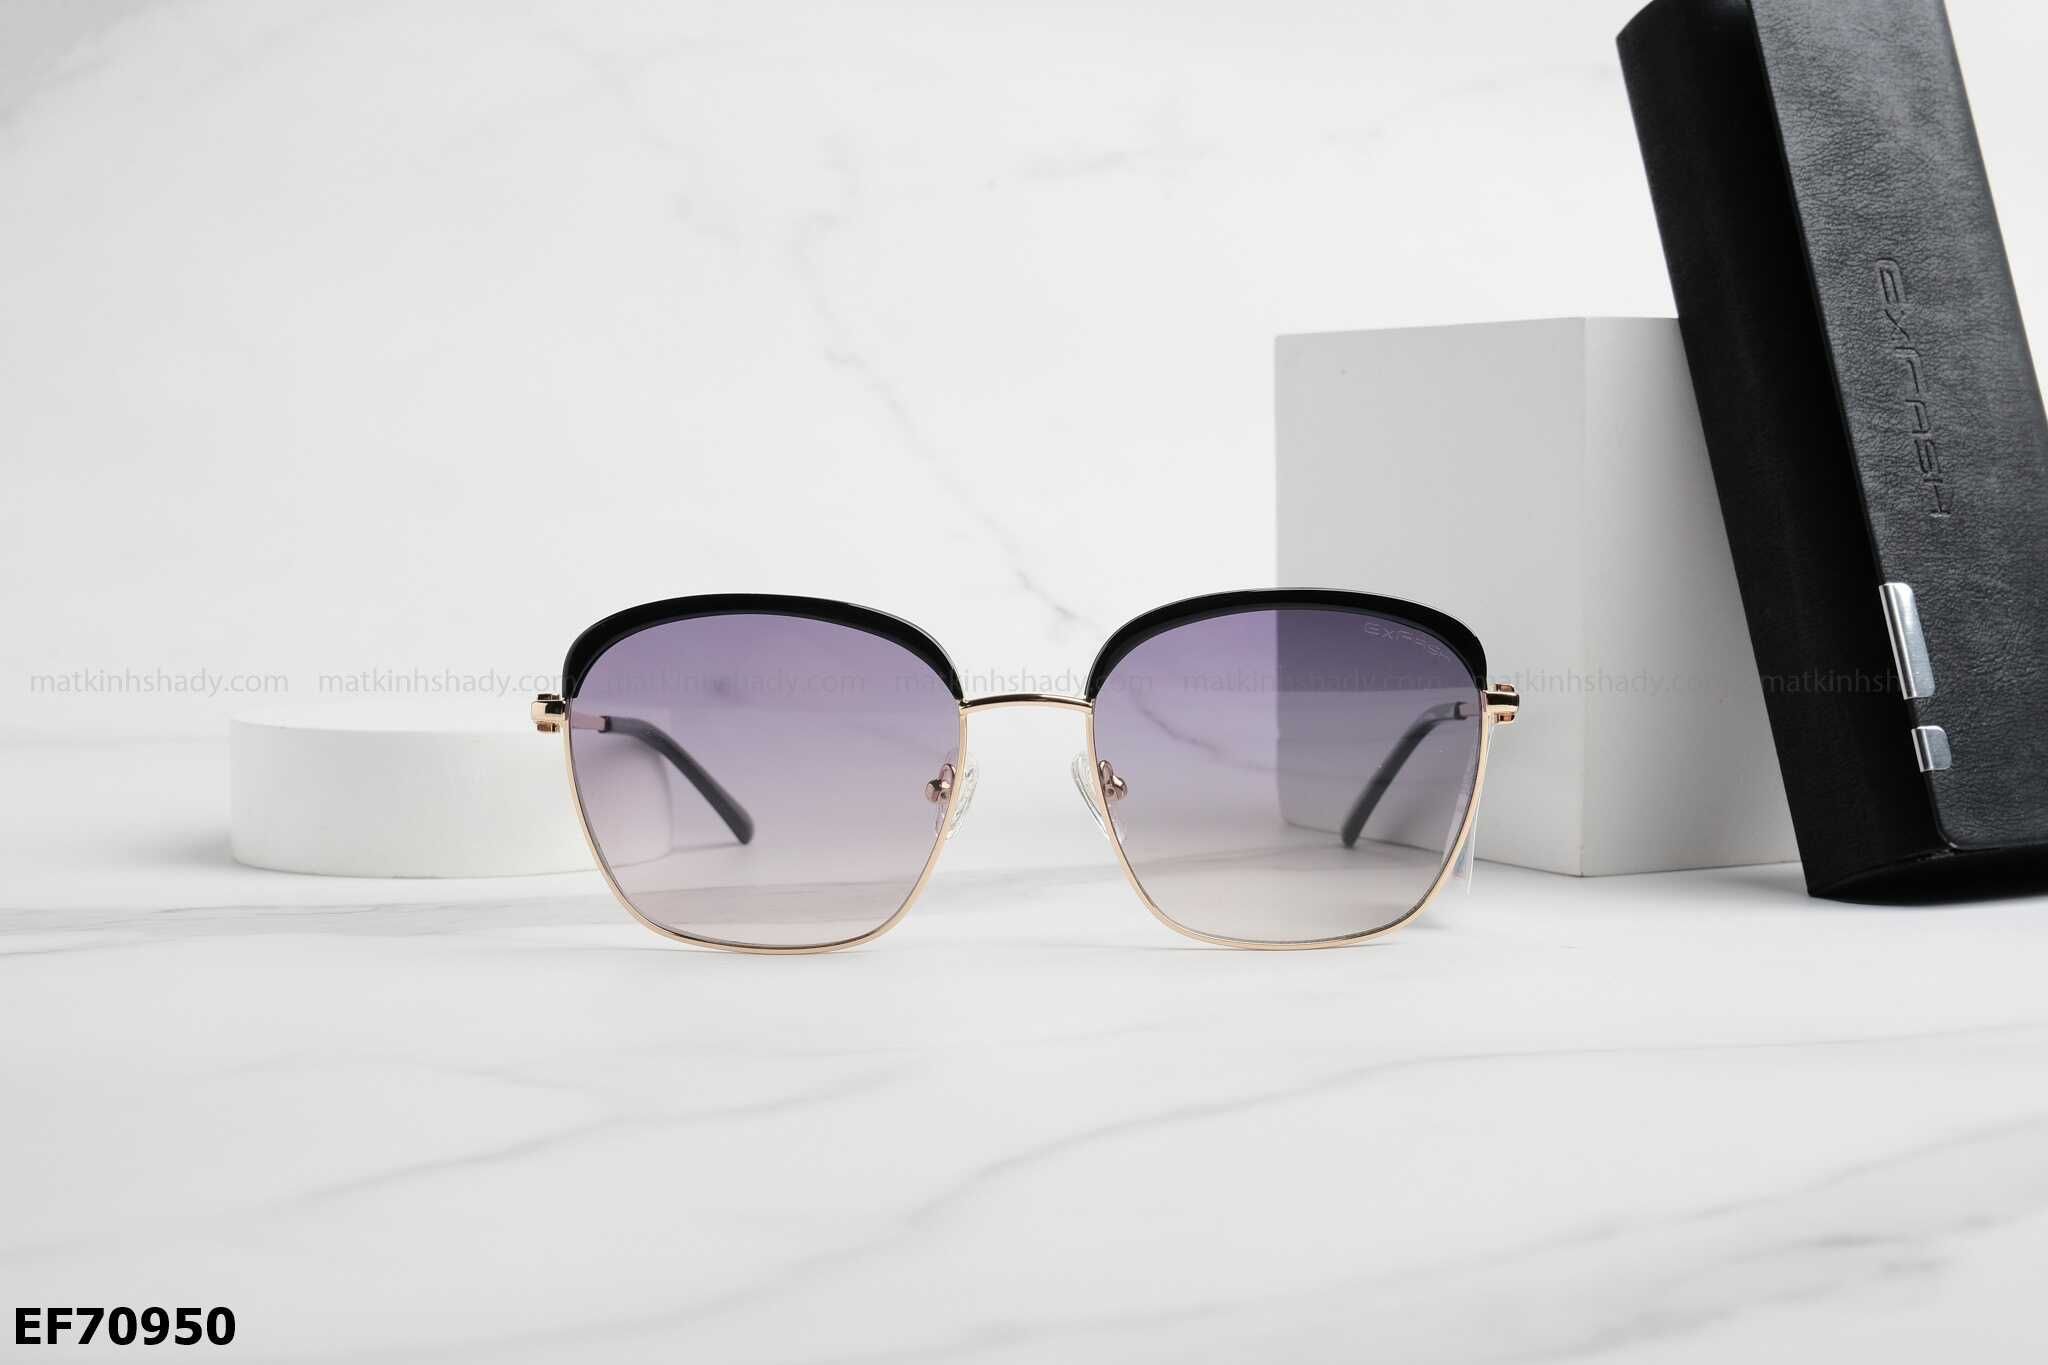  Exfash Eyewear - Sunglasses - EF70950 